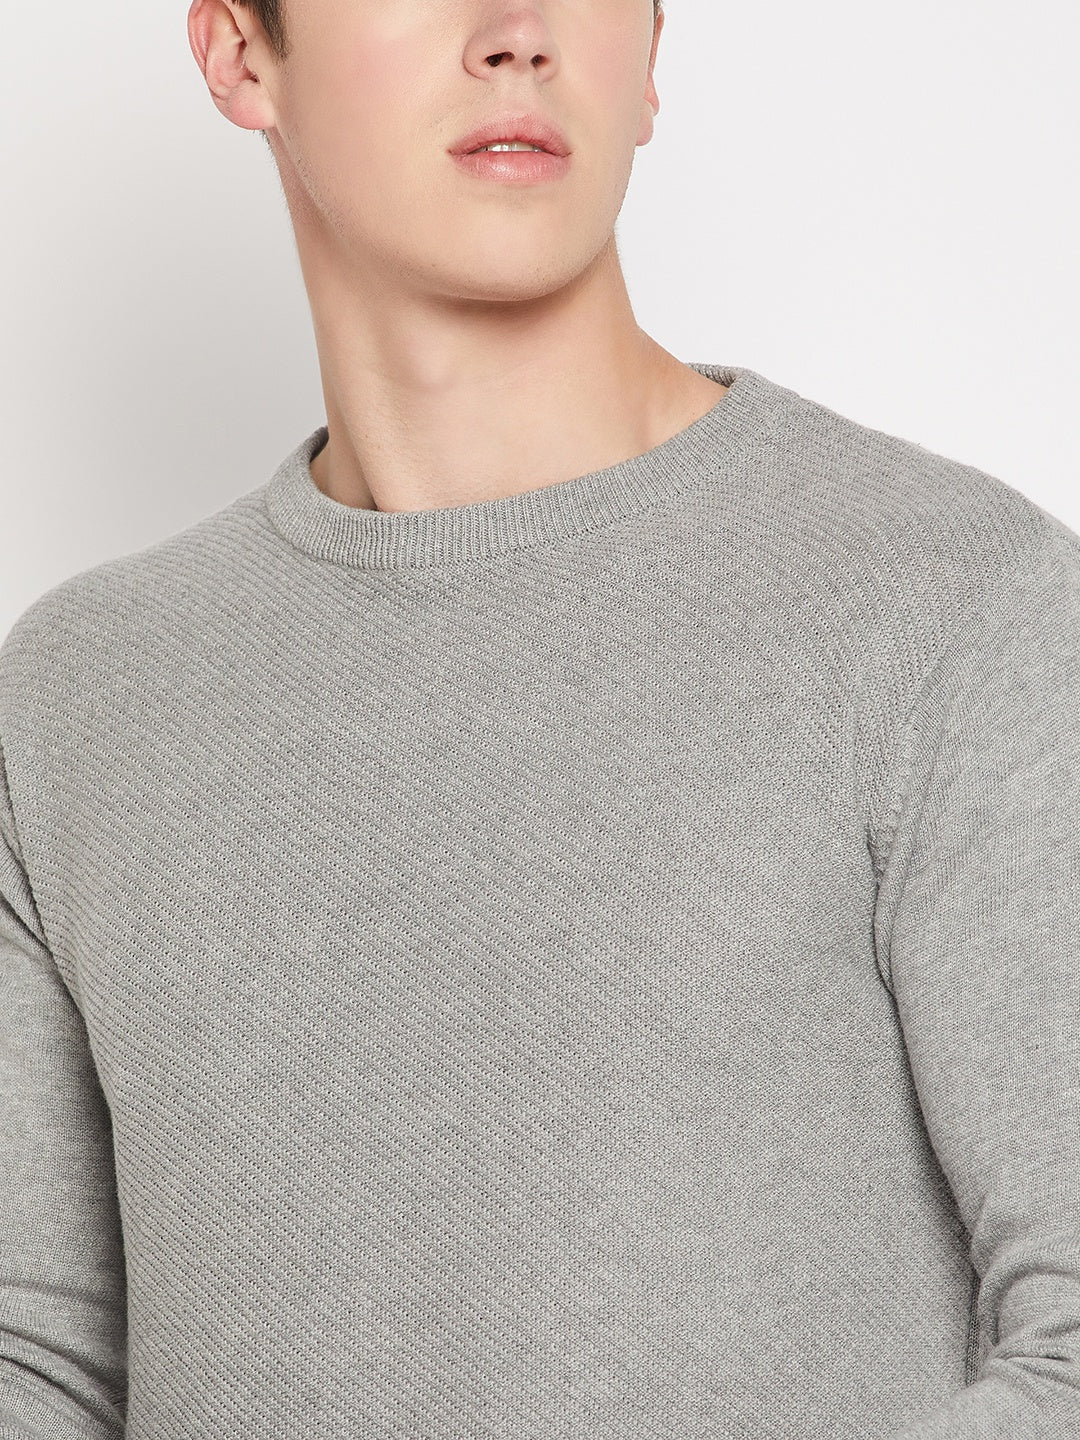 Camla Barcelona Grey Sweater For Men